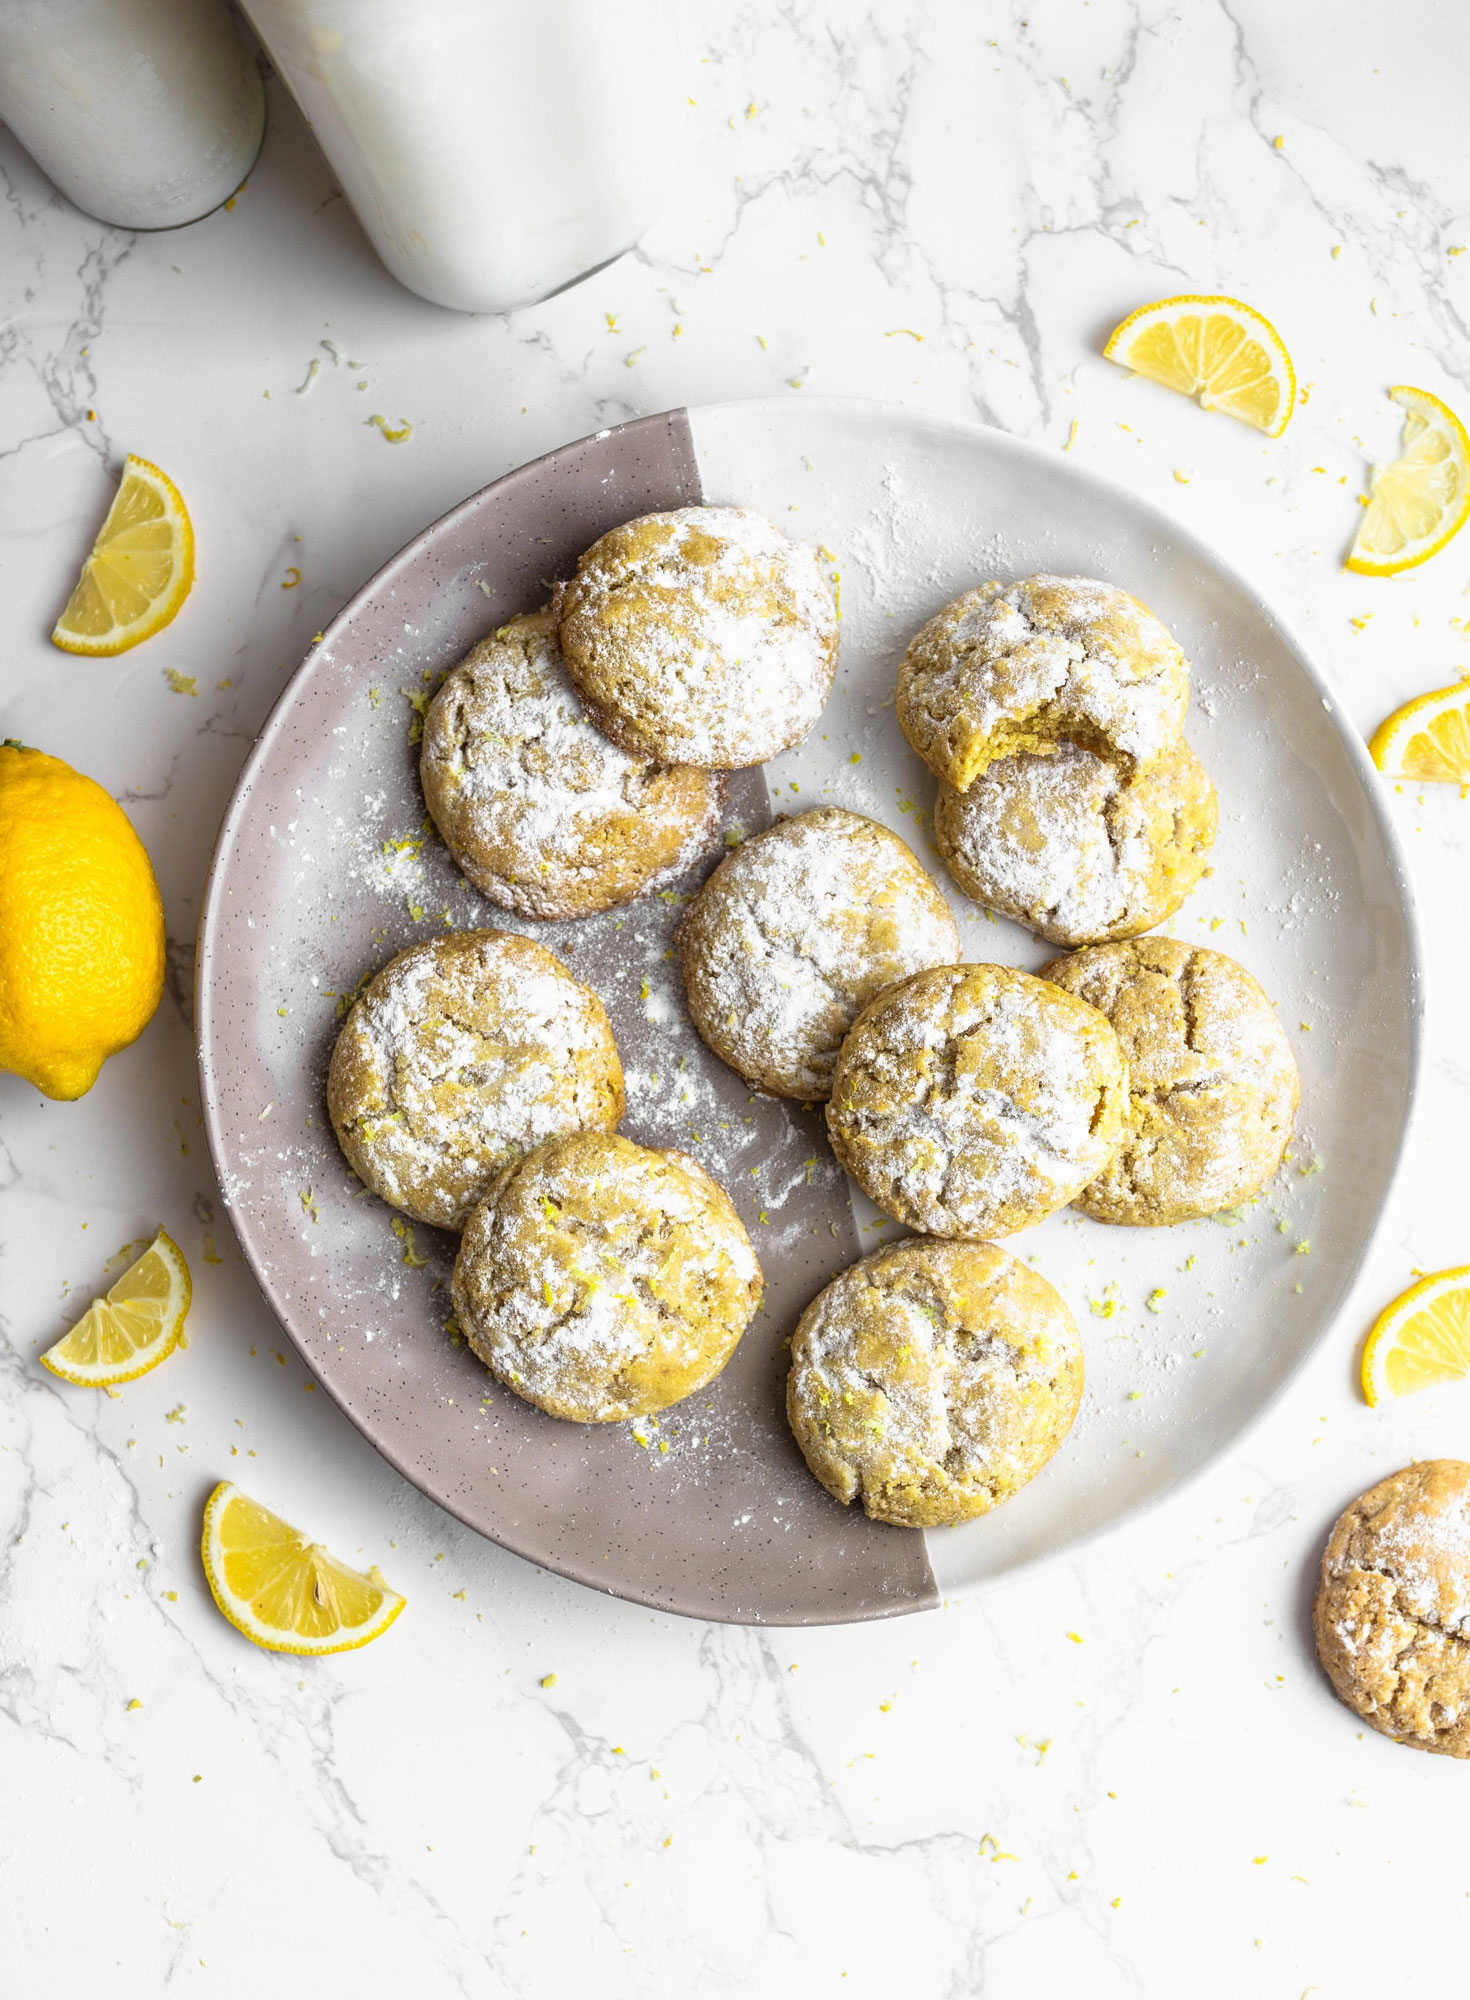 Grain-free, dairy-free lemon cookies from Stelle & Bakes Co